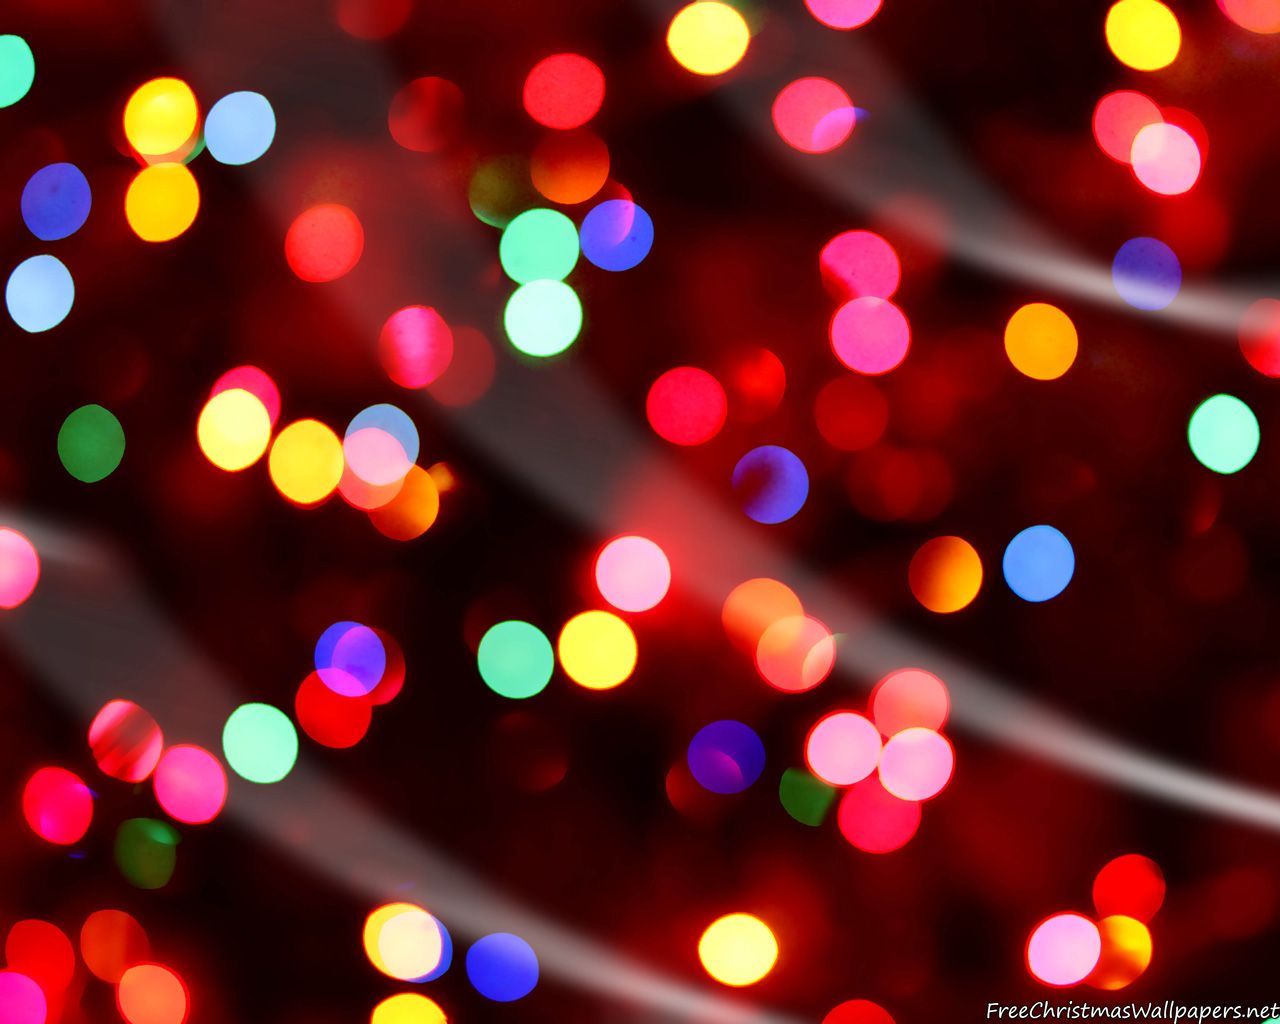 HD Christmas Celebration Lights. Christmas lights wallpaper, Christmas desktop wallpaper, Christmas lights background